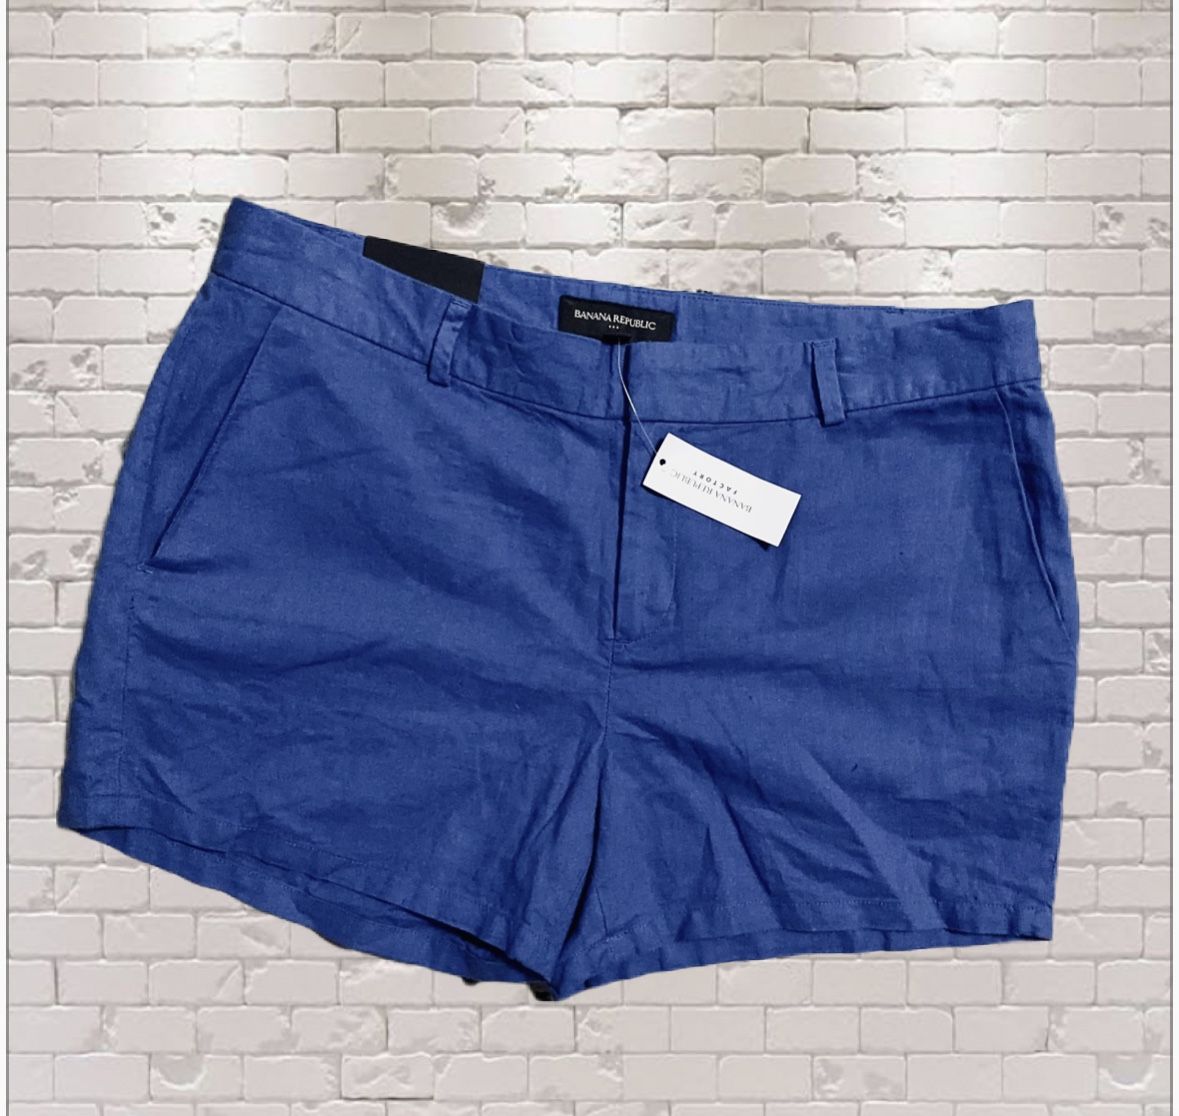 Banana Republic NWT Linen Shorts Women’s Size 6 Blue Short 4”